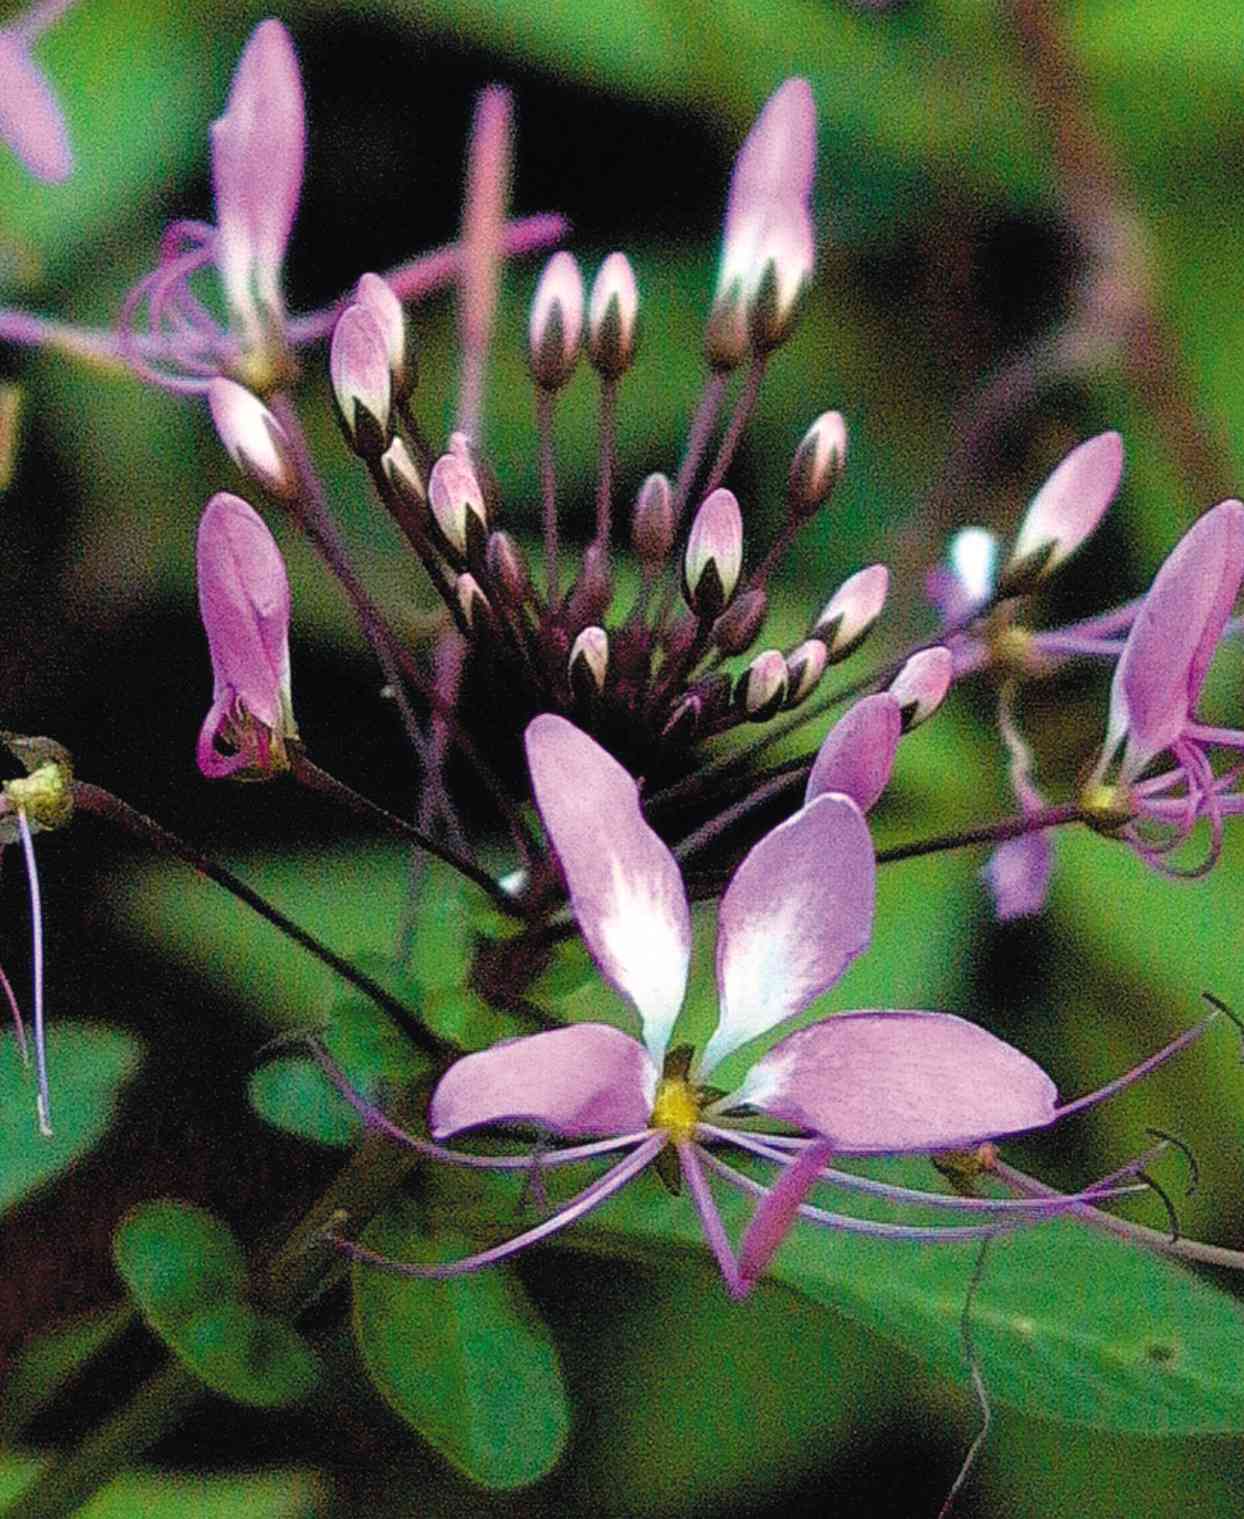 'Senorita Rosalita' spider flower